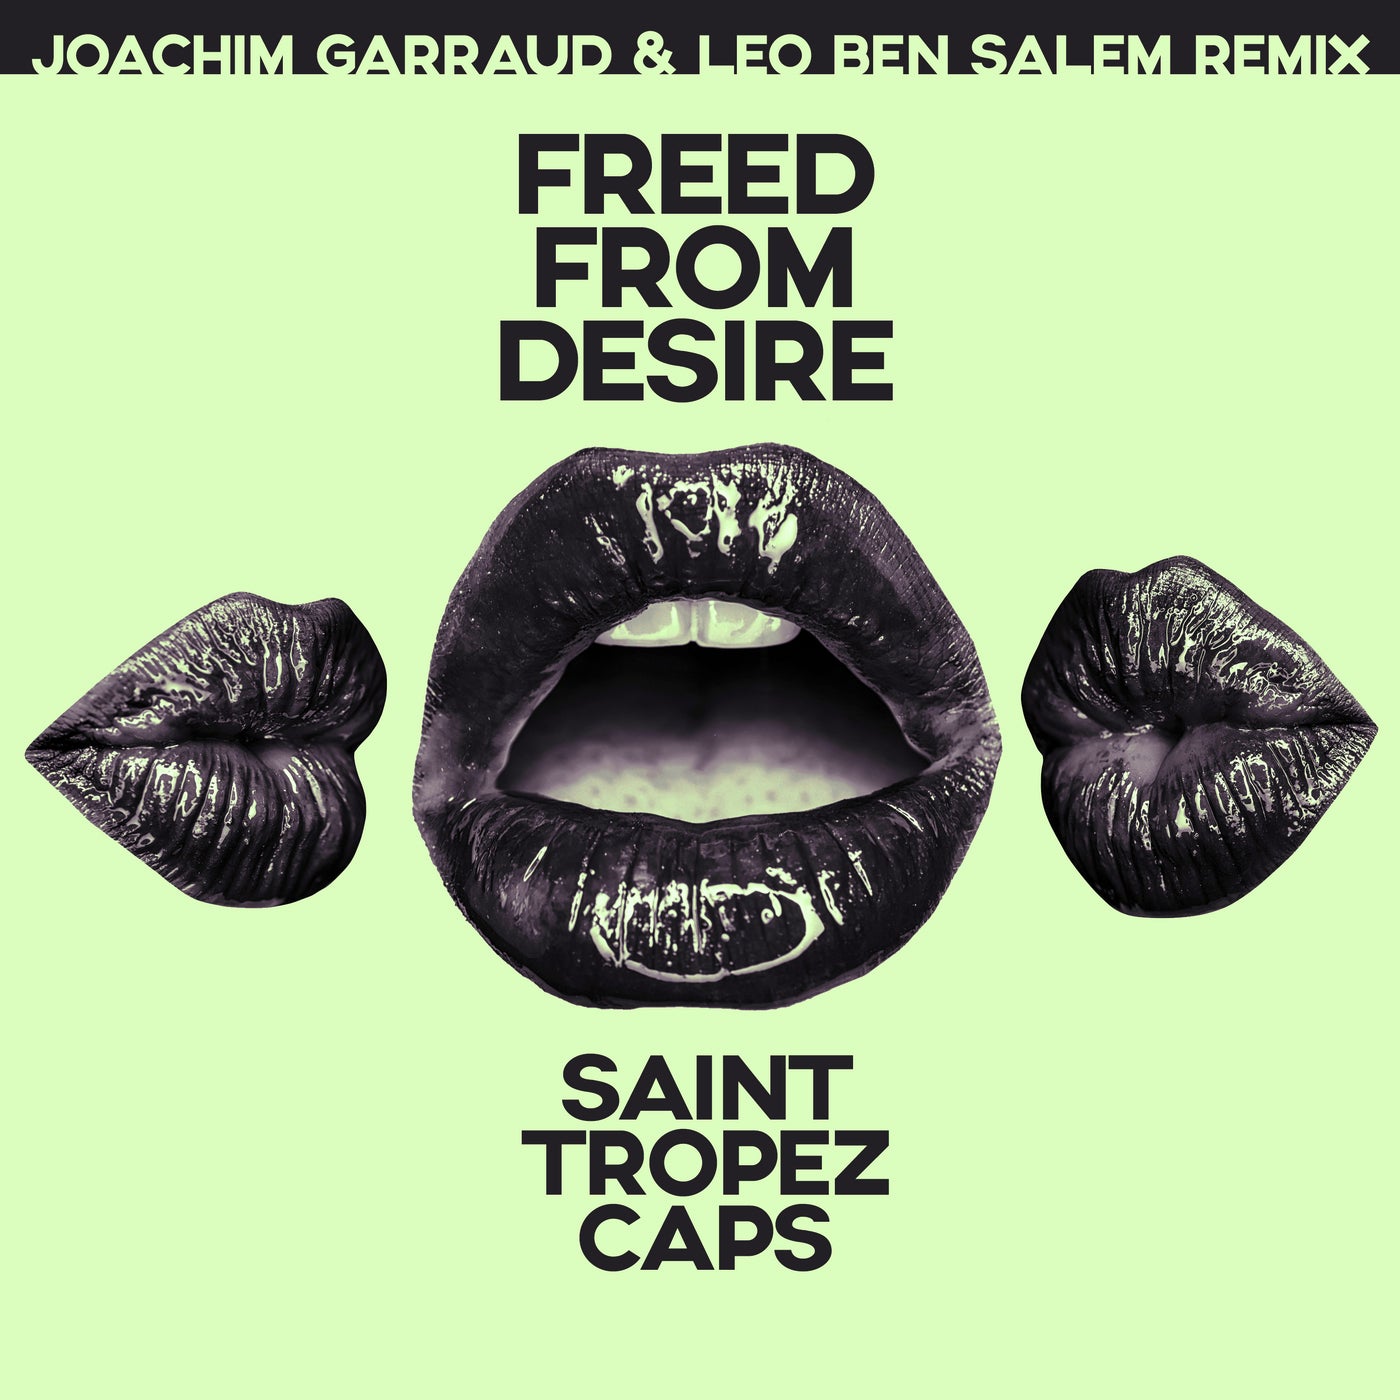 Freed From Desire (Joachim Garraud & Leo Ben Salem Remix)